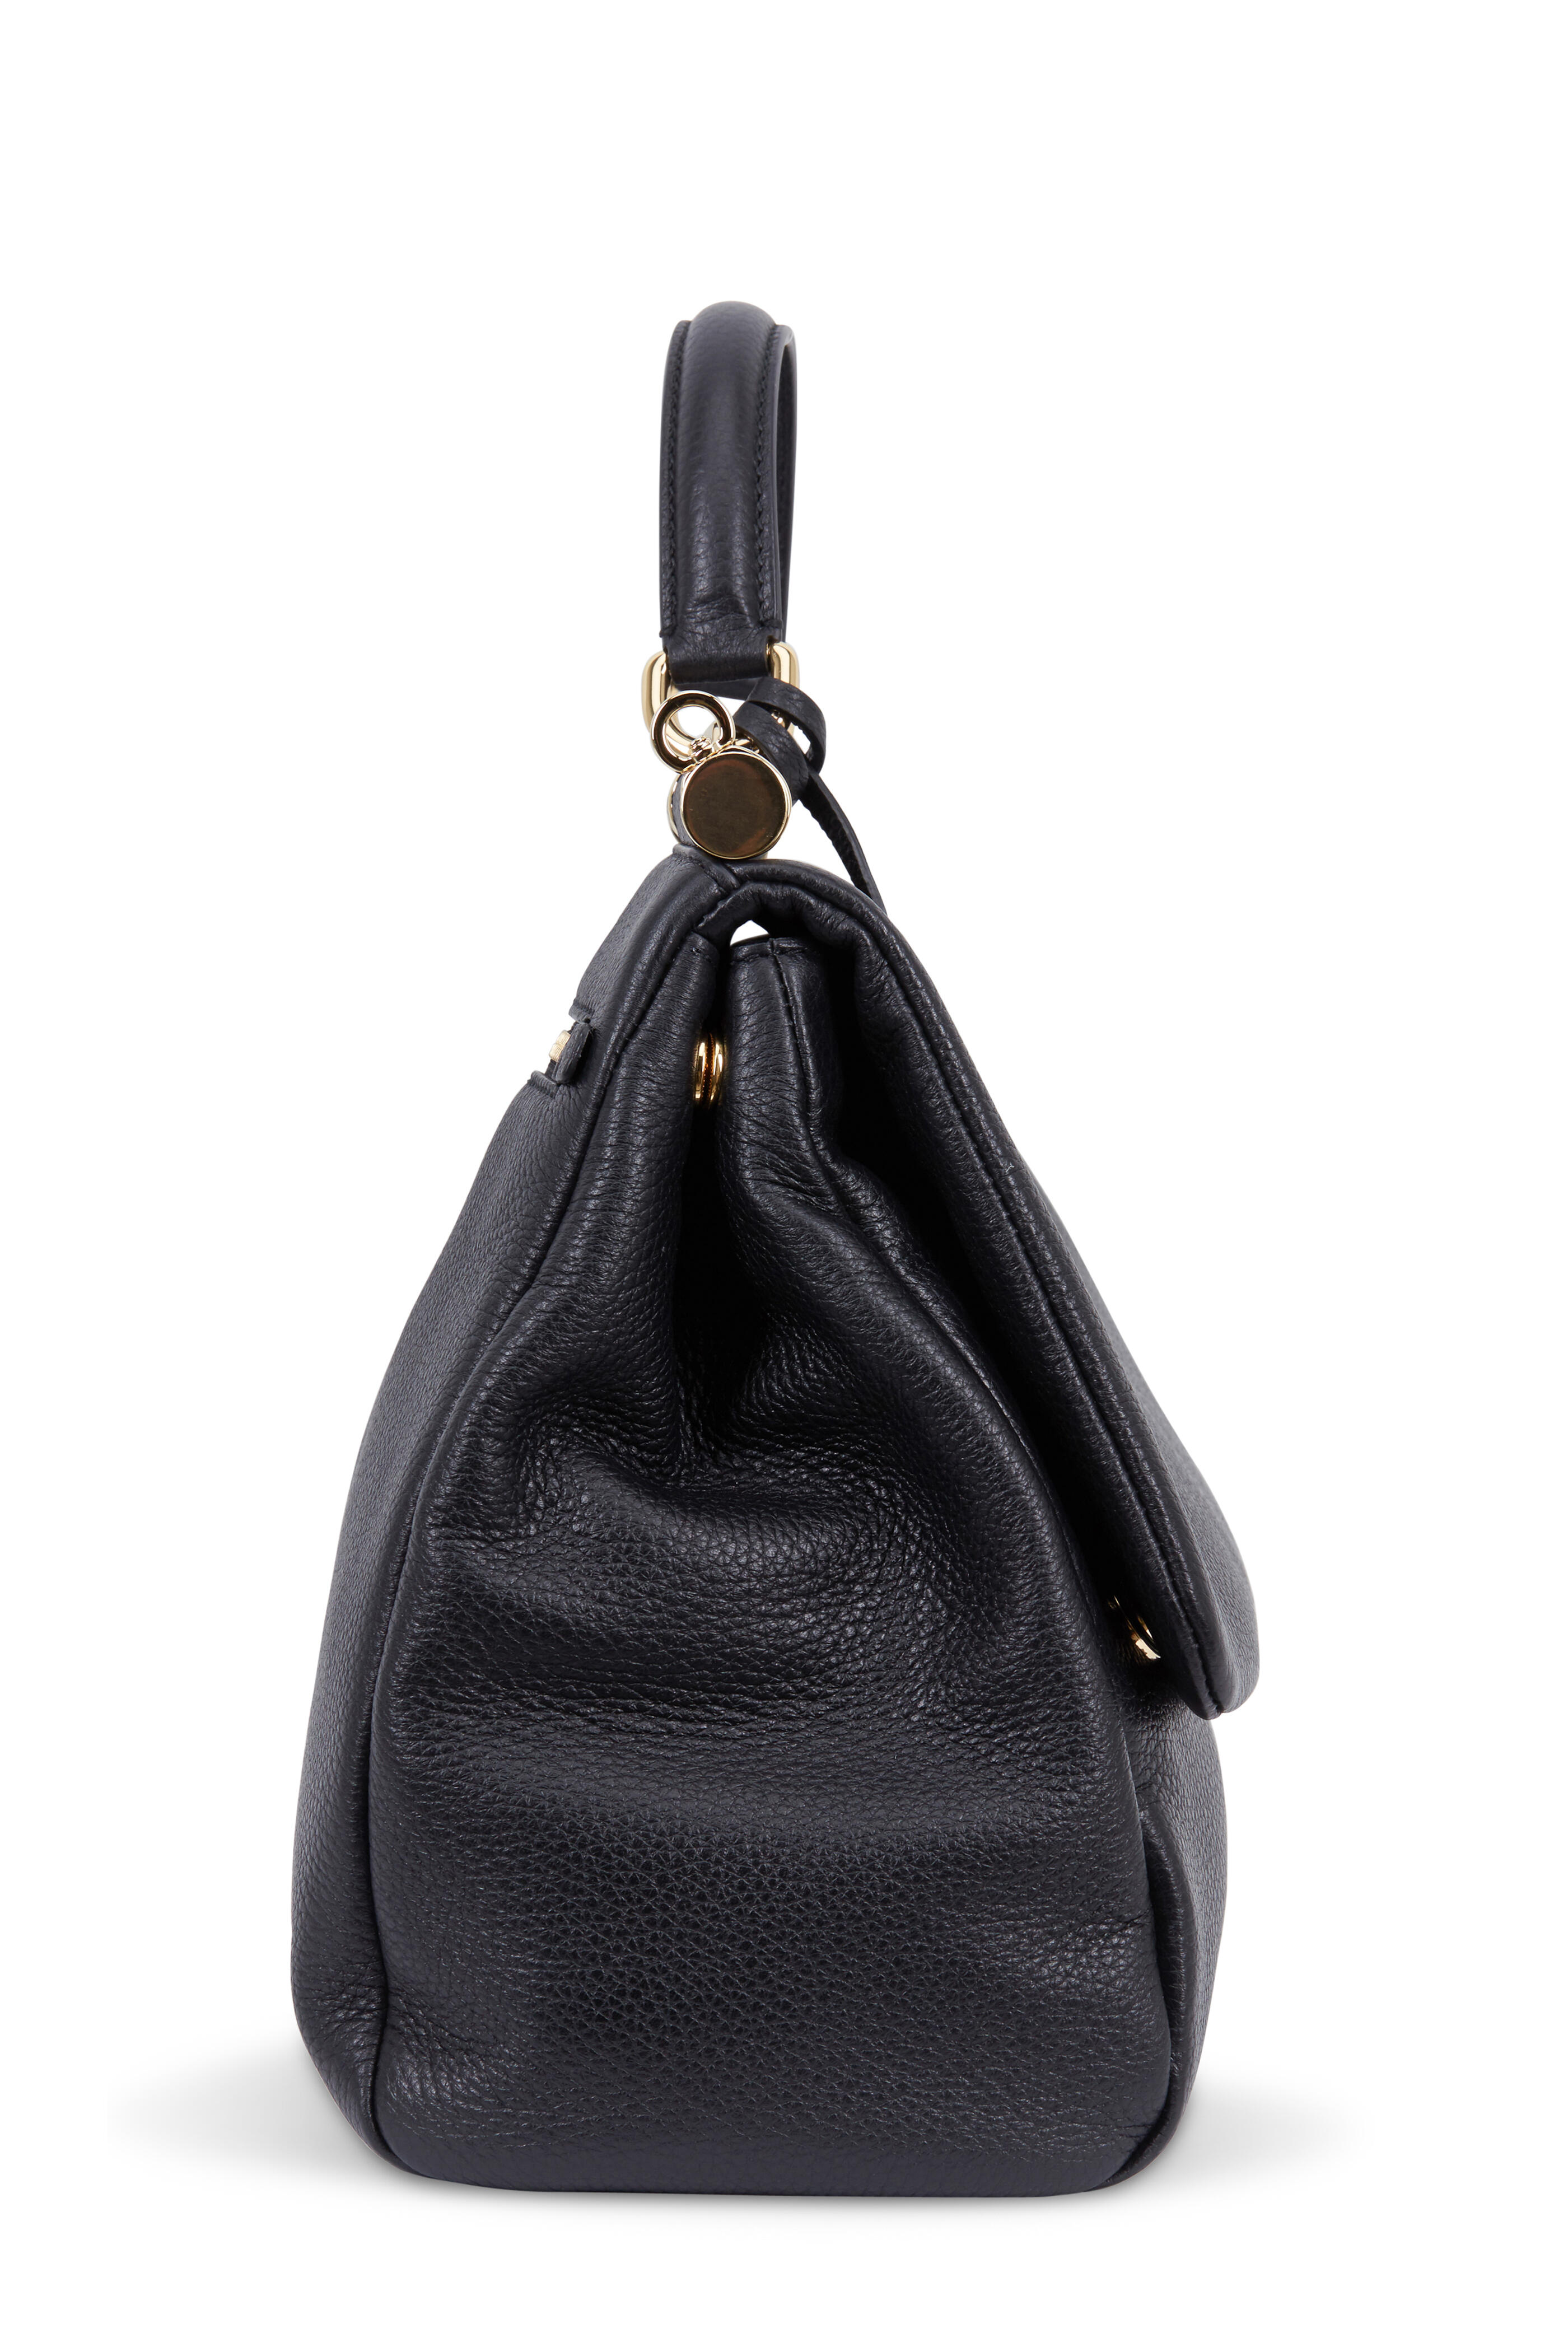 Dolce & Gabbana Miss Sicily Bag Leather Large Black